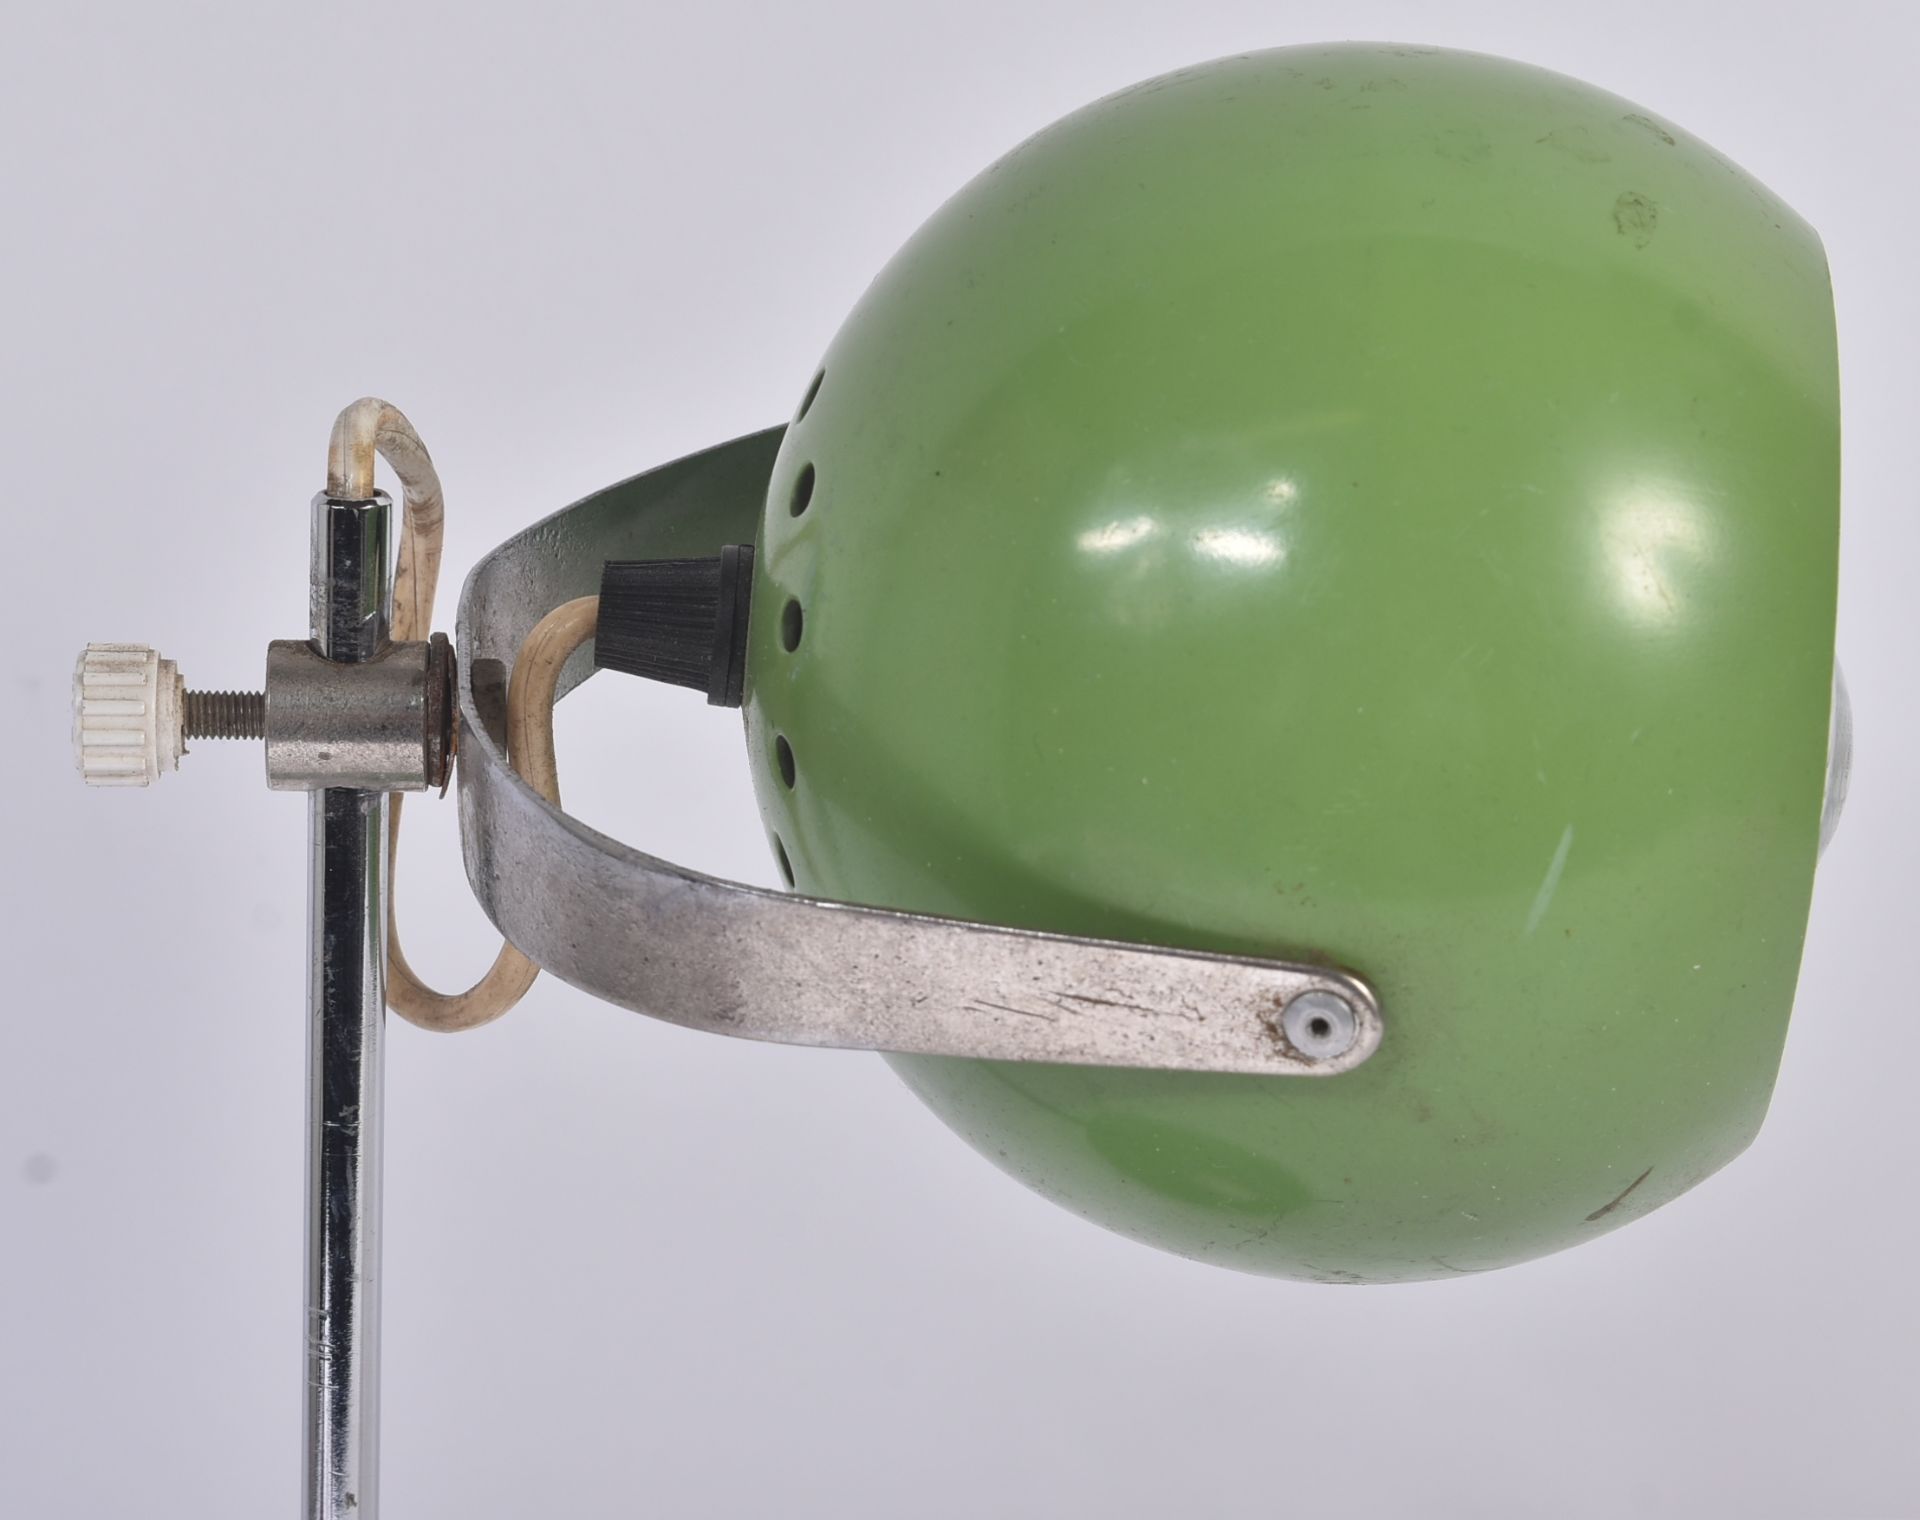 RETRO VINTAGE GREEN EYEBALL DESK LAMP - Image 4 of 5